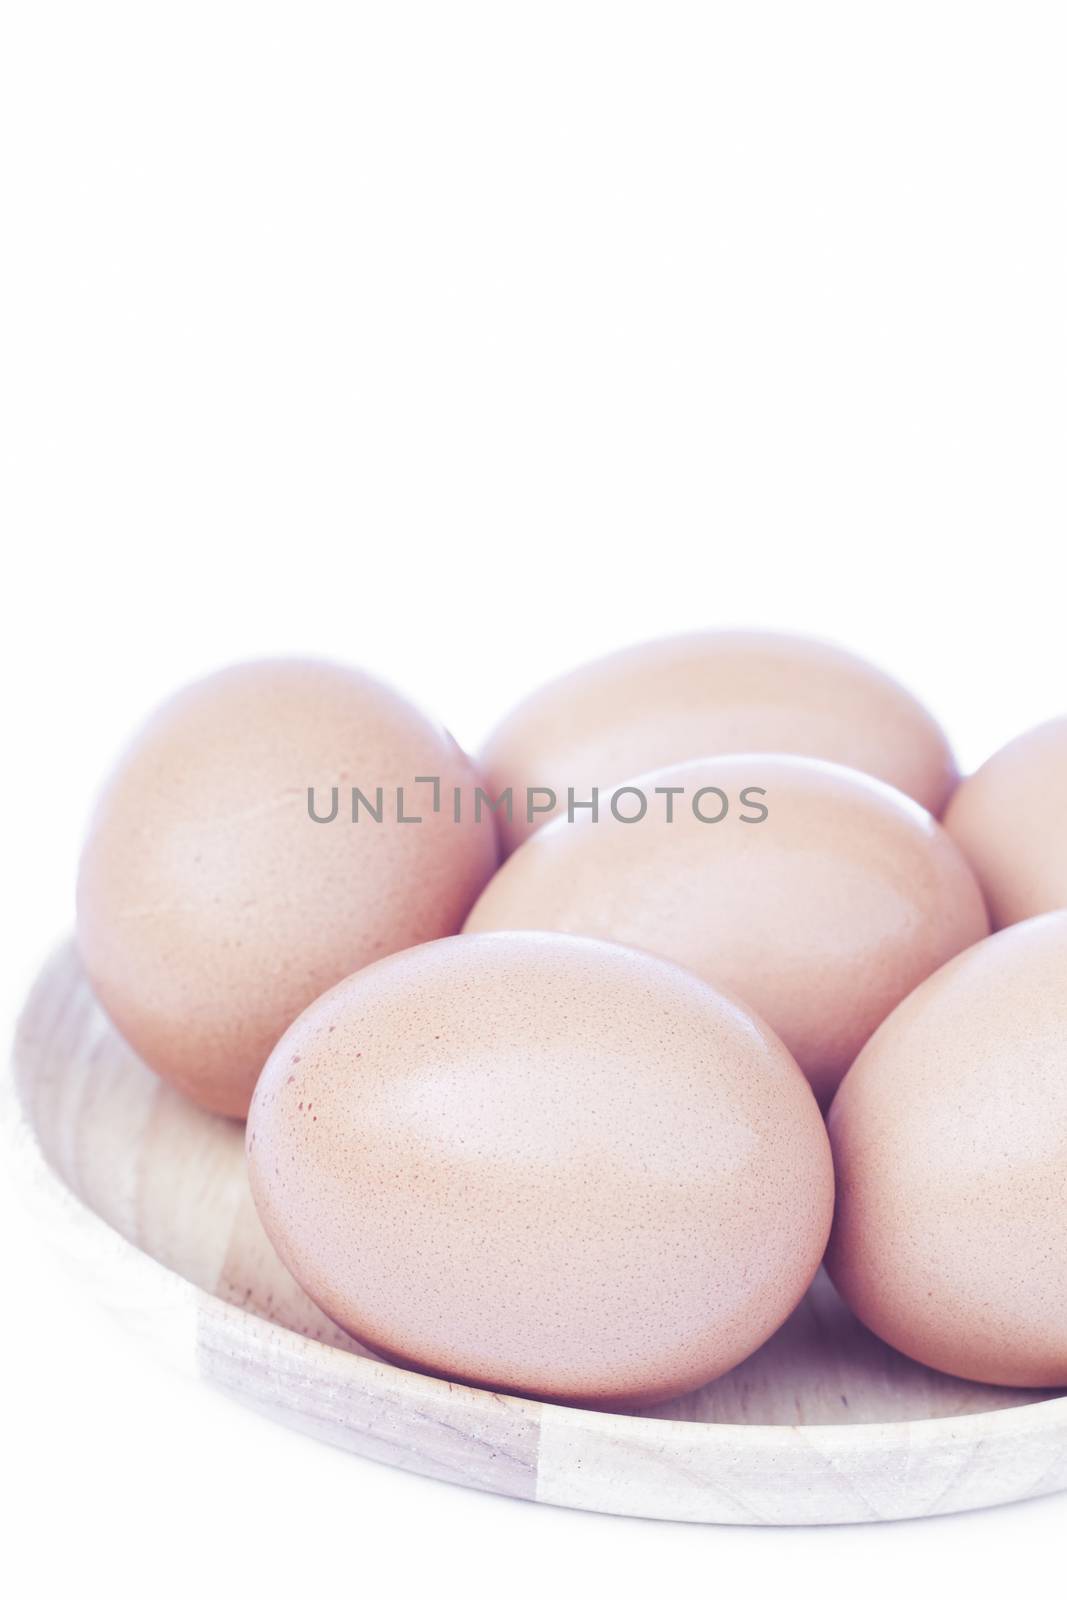 Eggs isolated on white background, stock photo